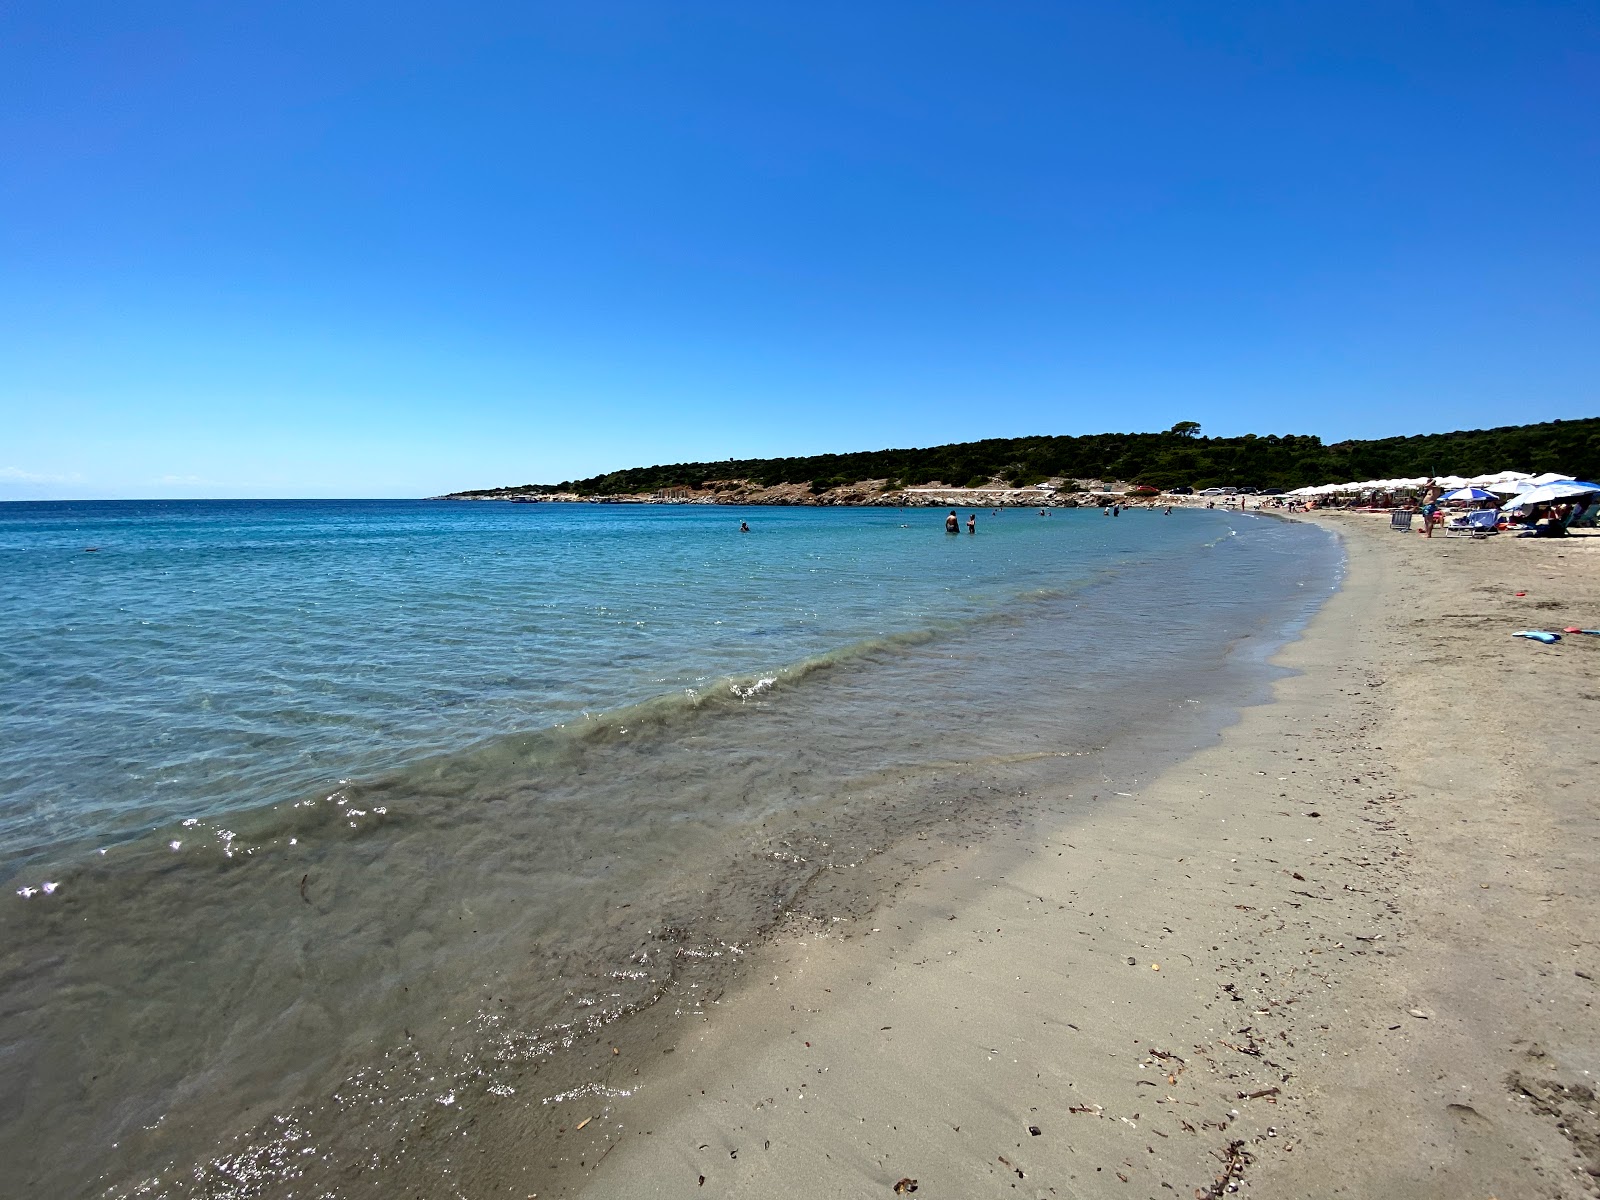 Foto di Kalogria beach con una superficie del sabbia luminosa